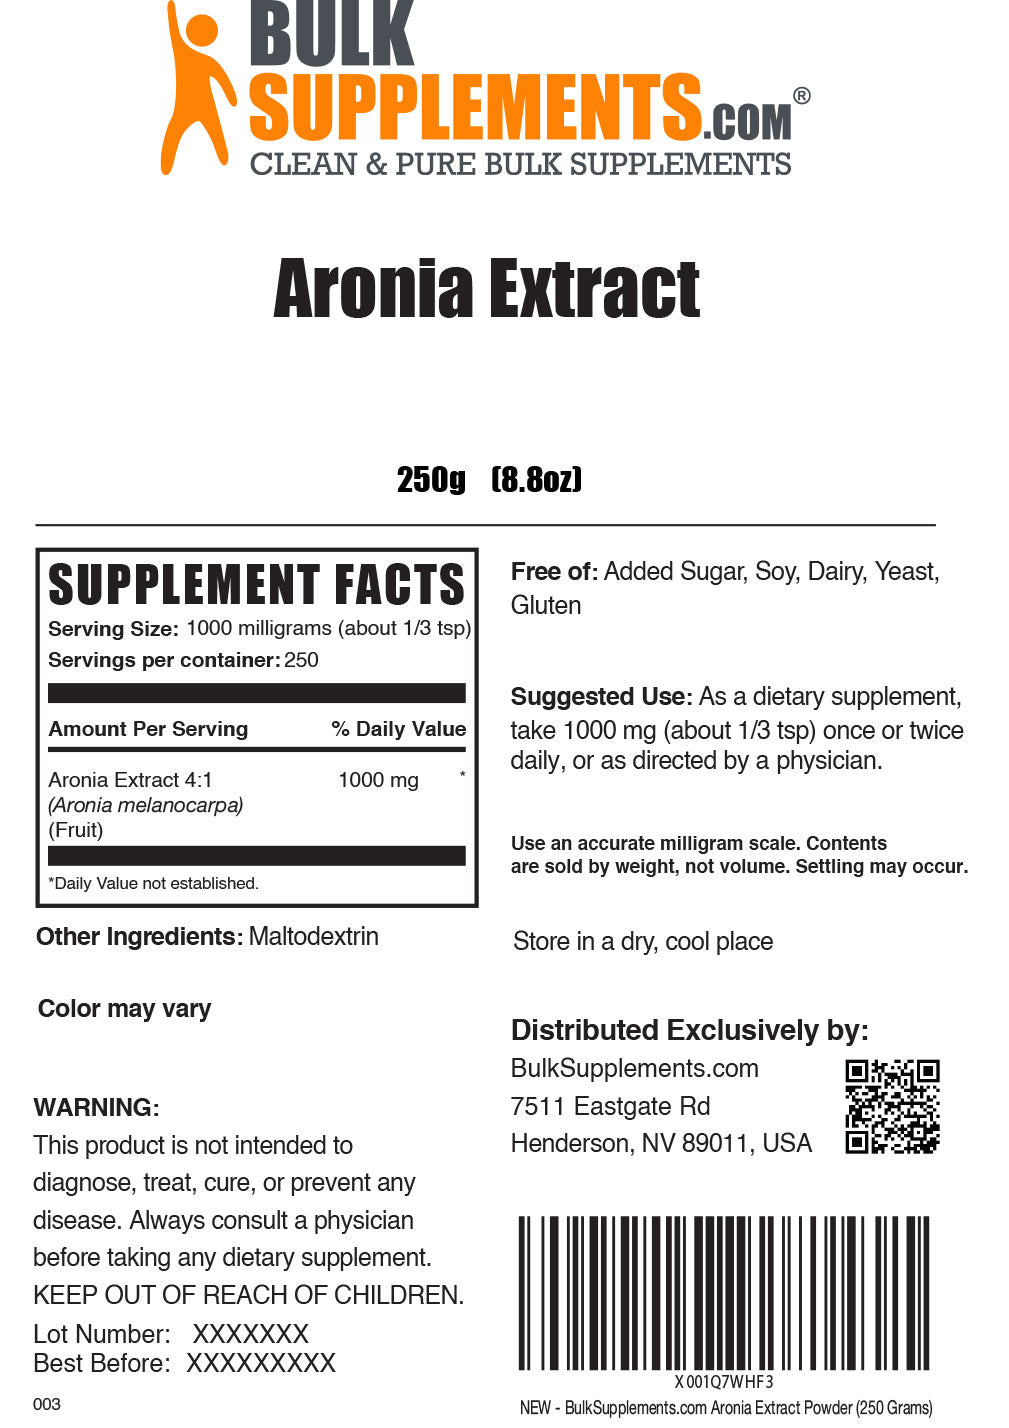 Aronia Extract Powder Label 250g